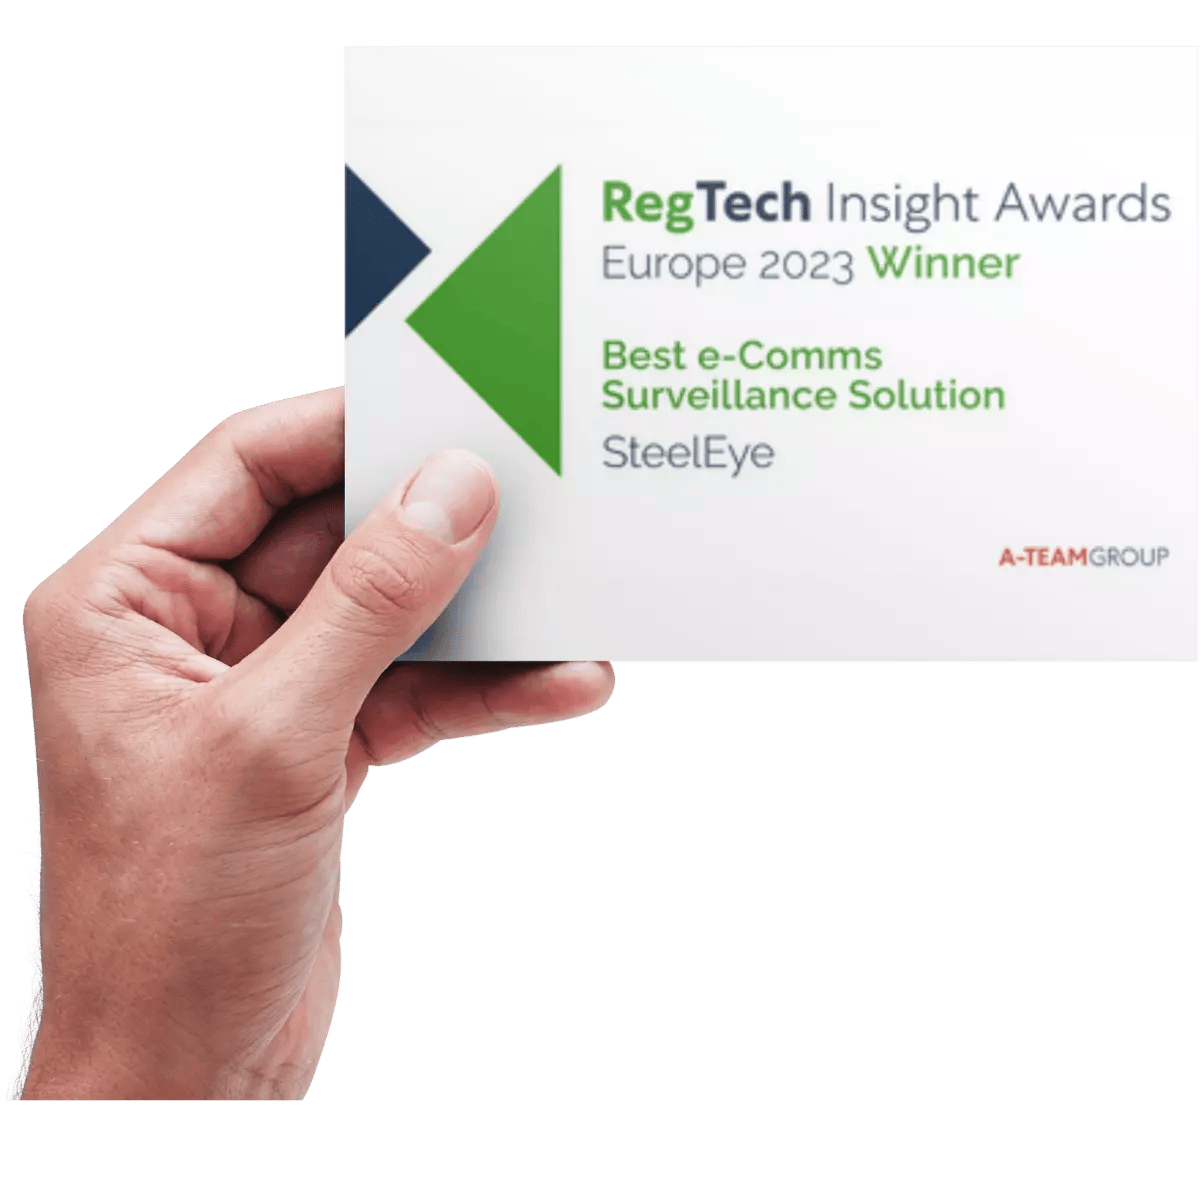 Regtech Inisght Awards 2023 - Best e-Comms Surveillance Solution